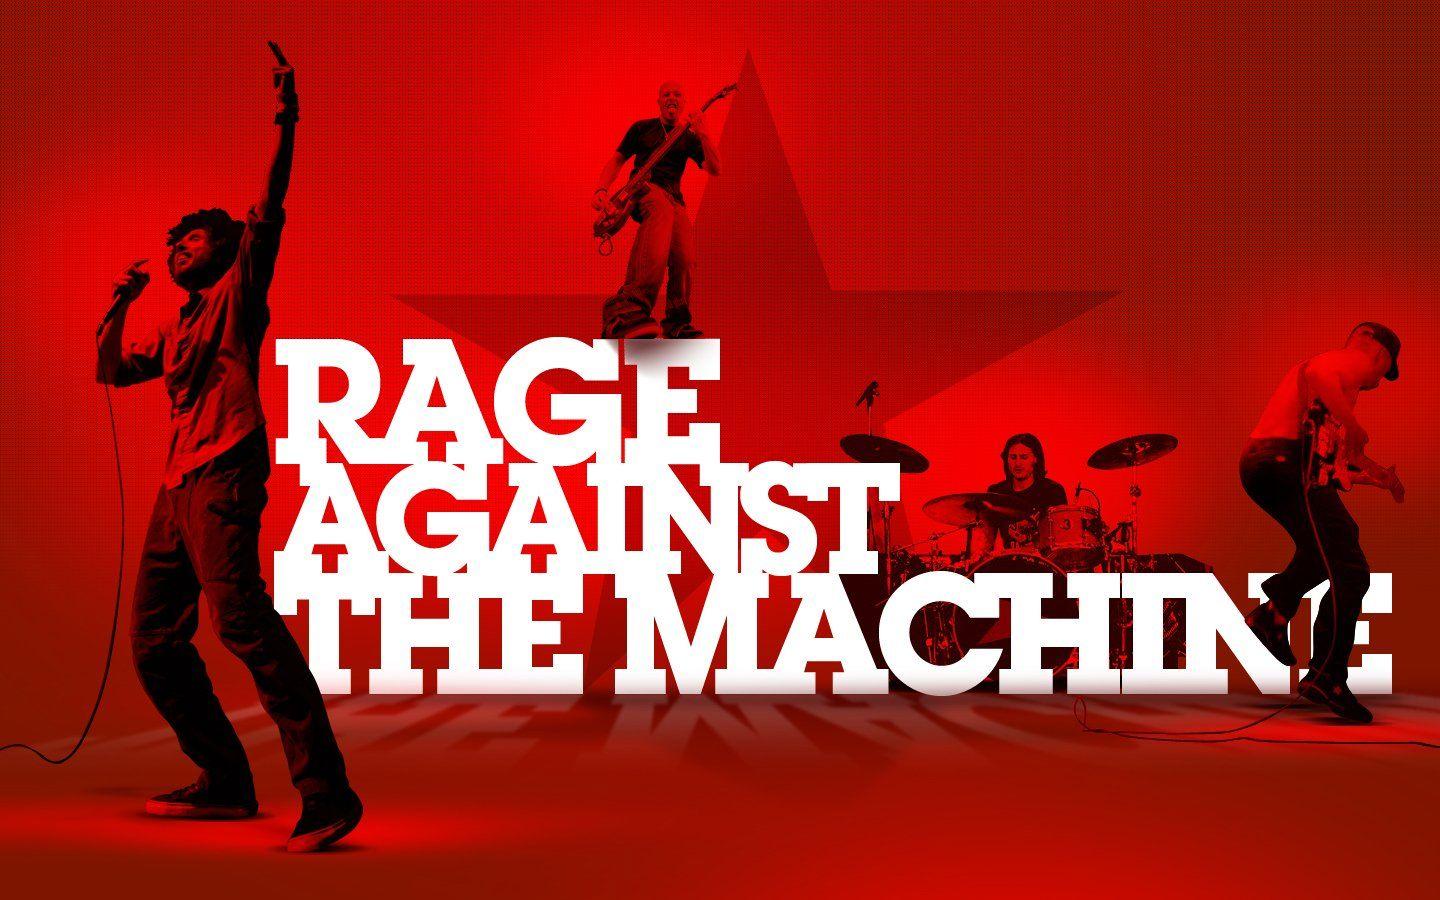 Rage Against The Machine HD Wallpaper. Background